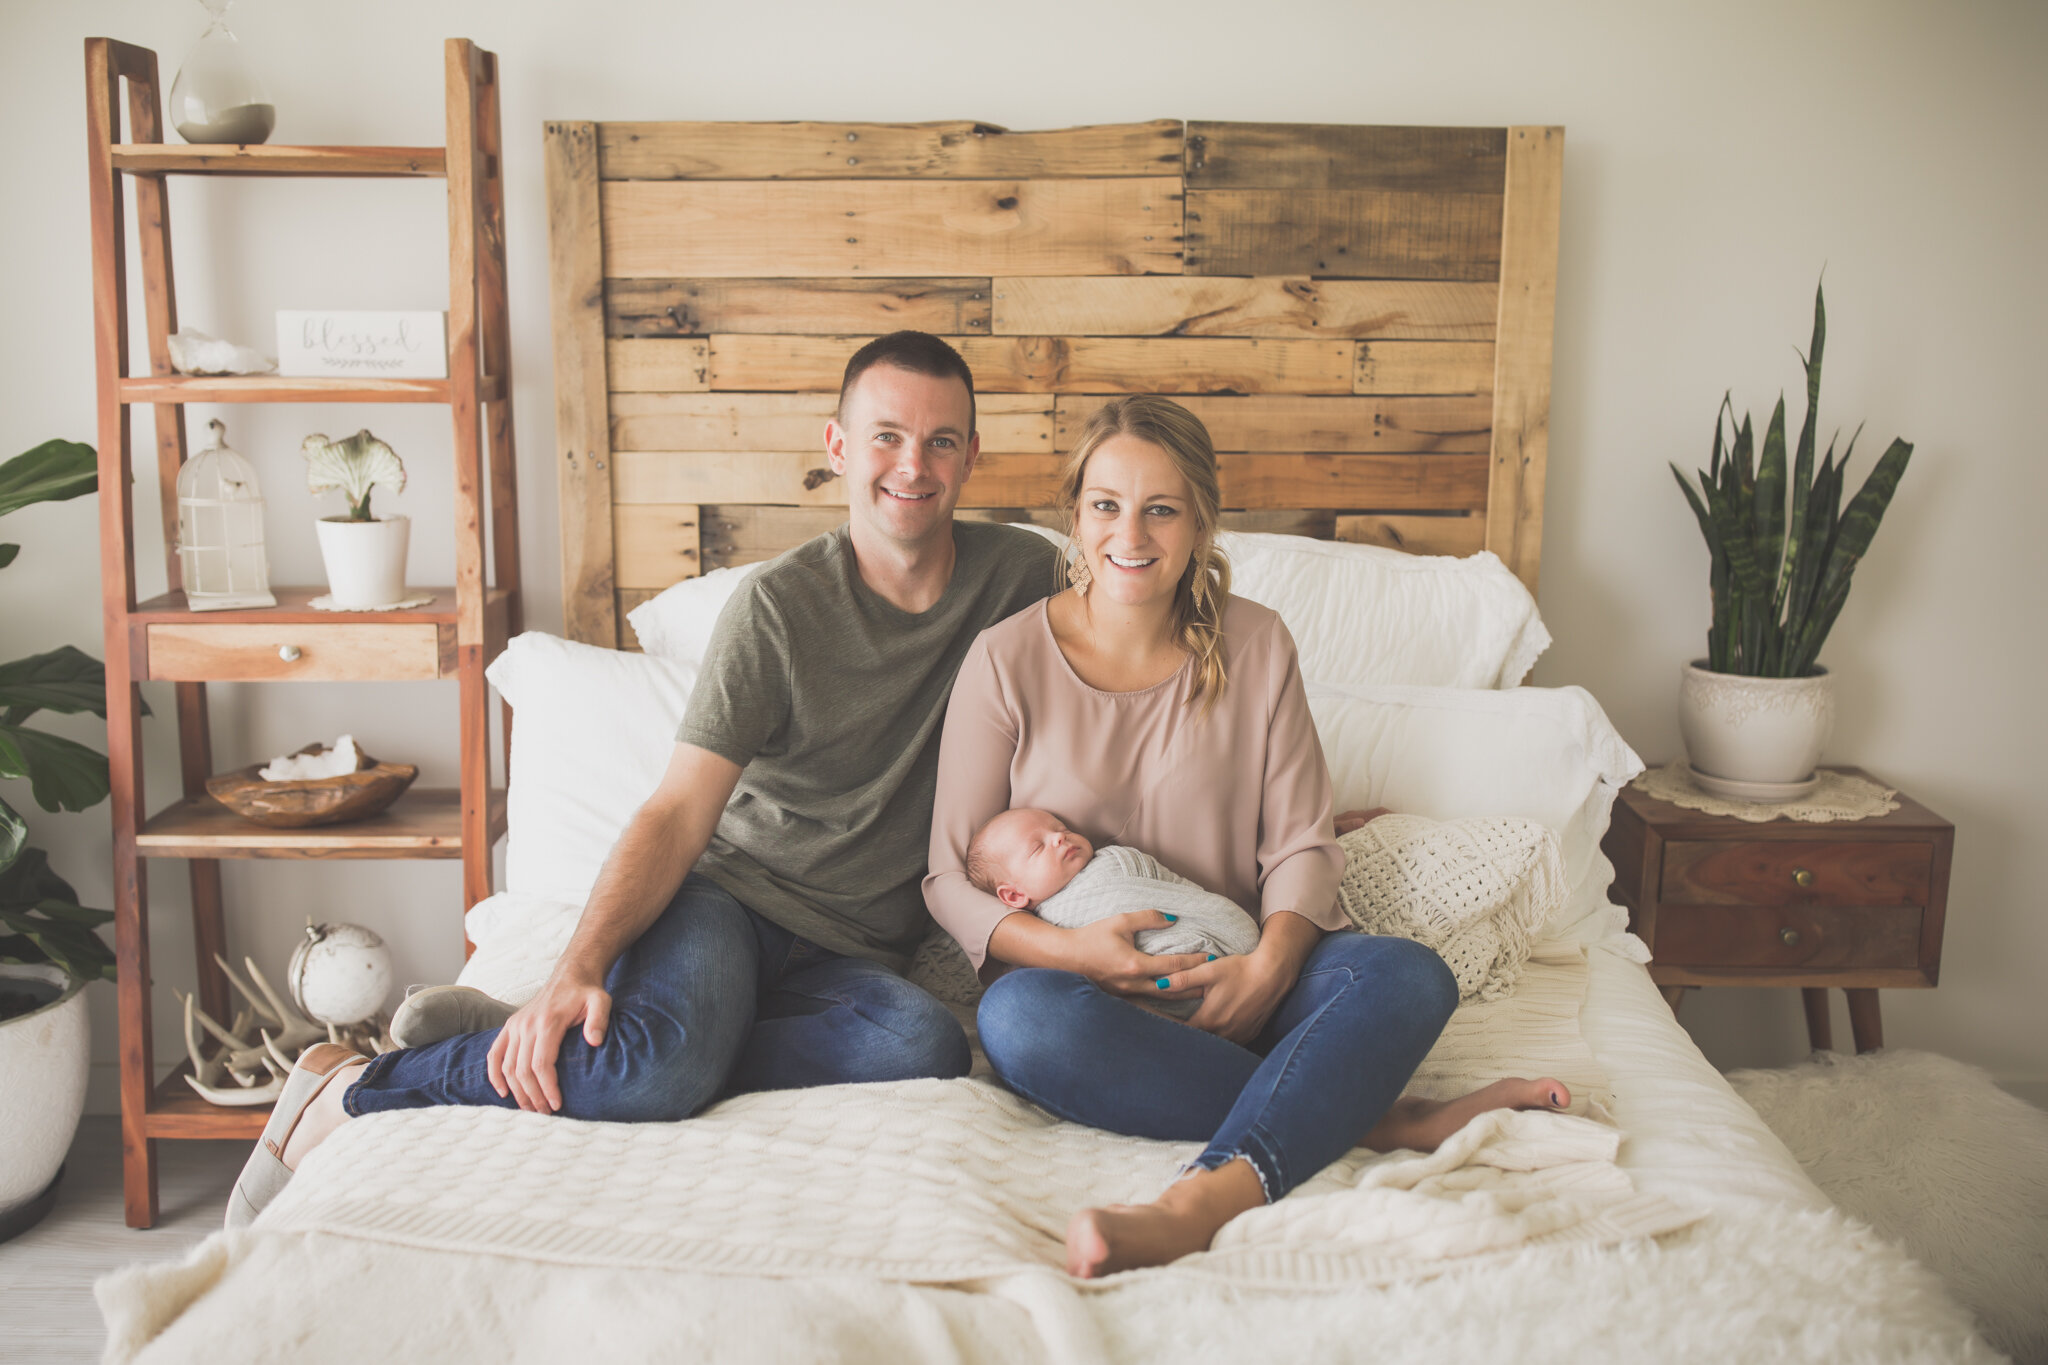 Case Newborn Session Birth Announcement - Cara Peterson Photography 2019  -1.jpg